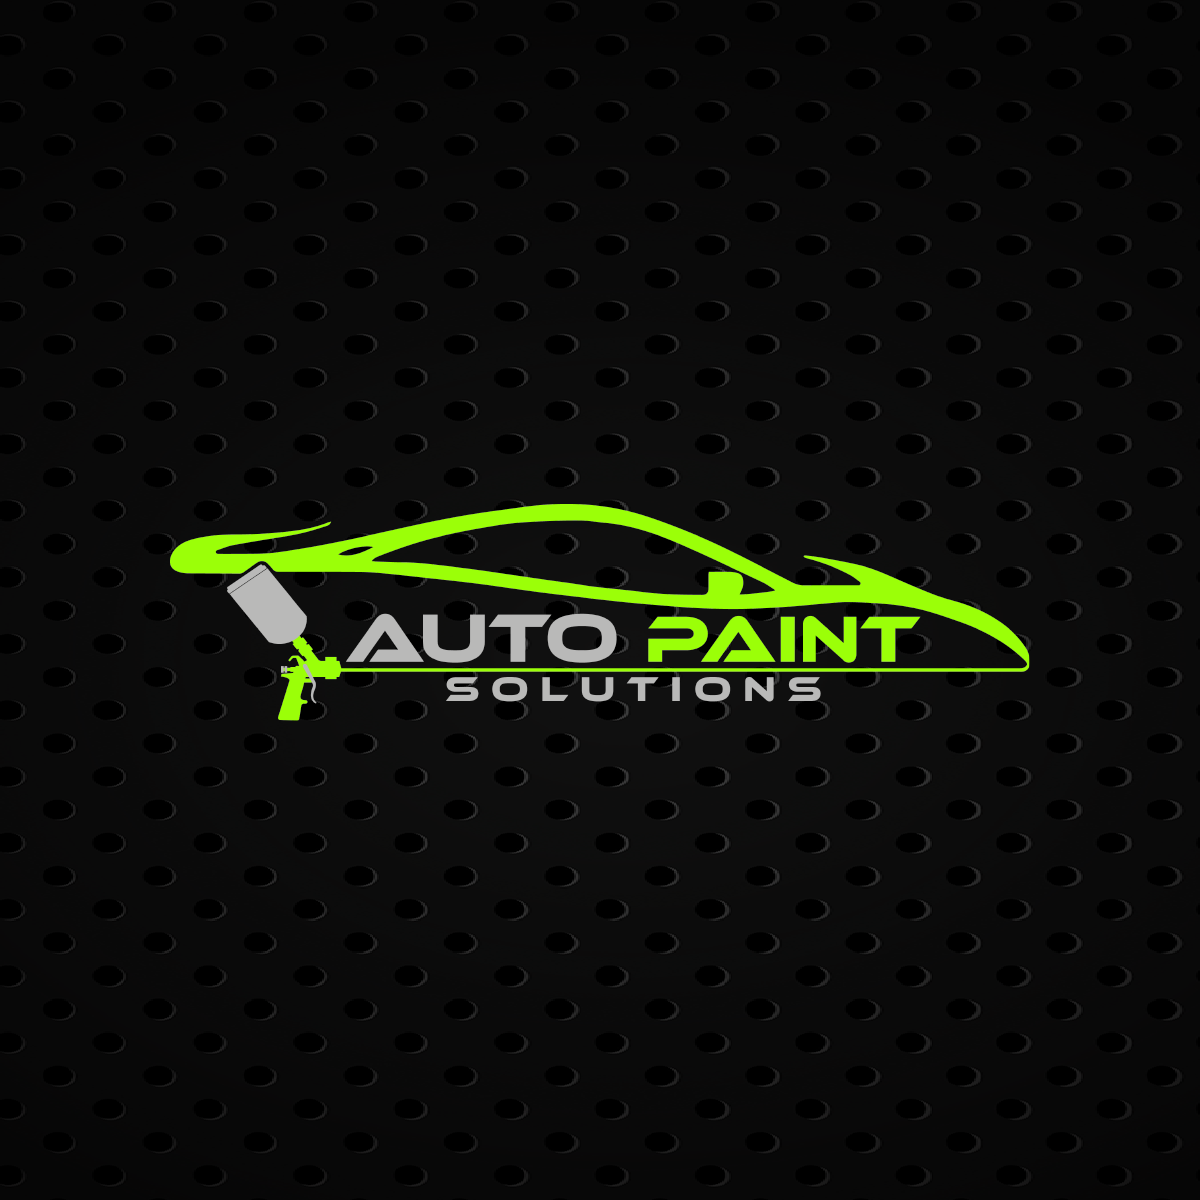 Auto Paint Solutions